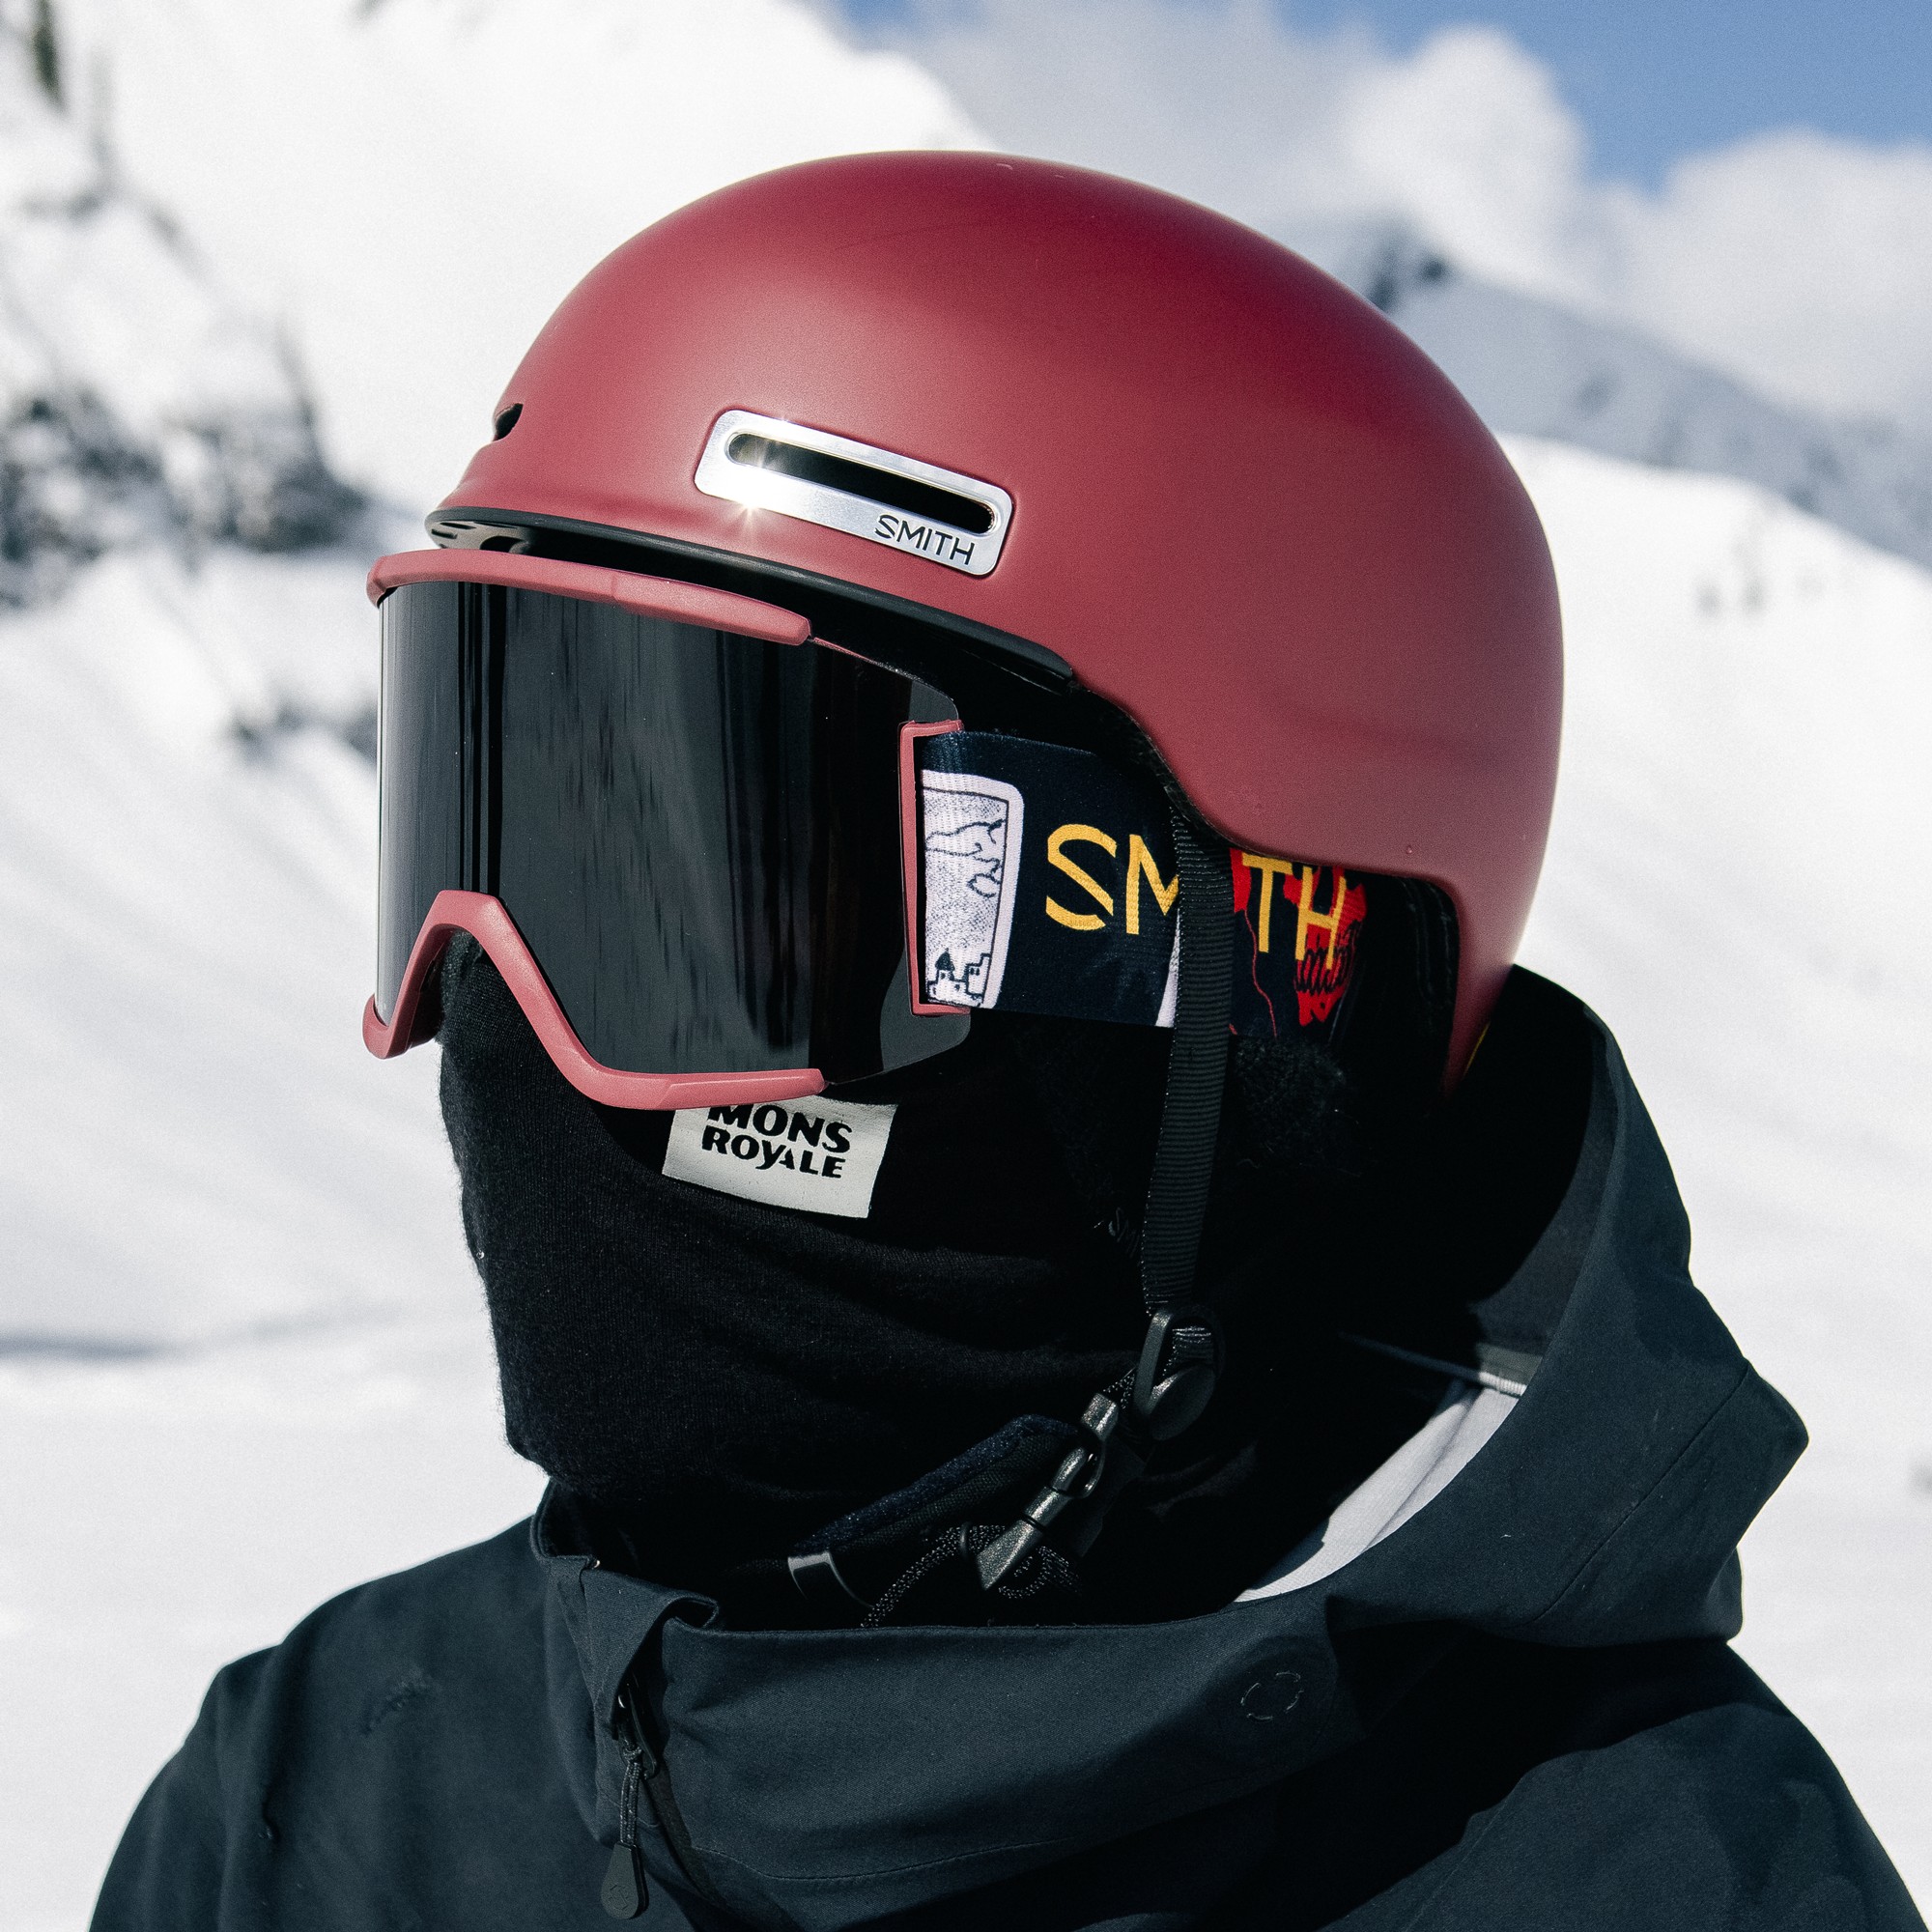 Smith Maze Ski/Snowboard Helmet